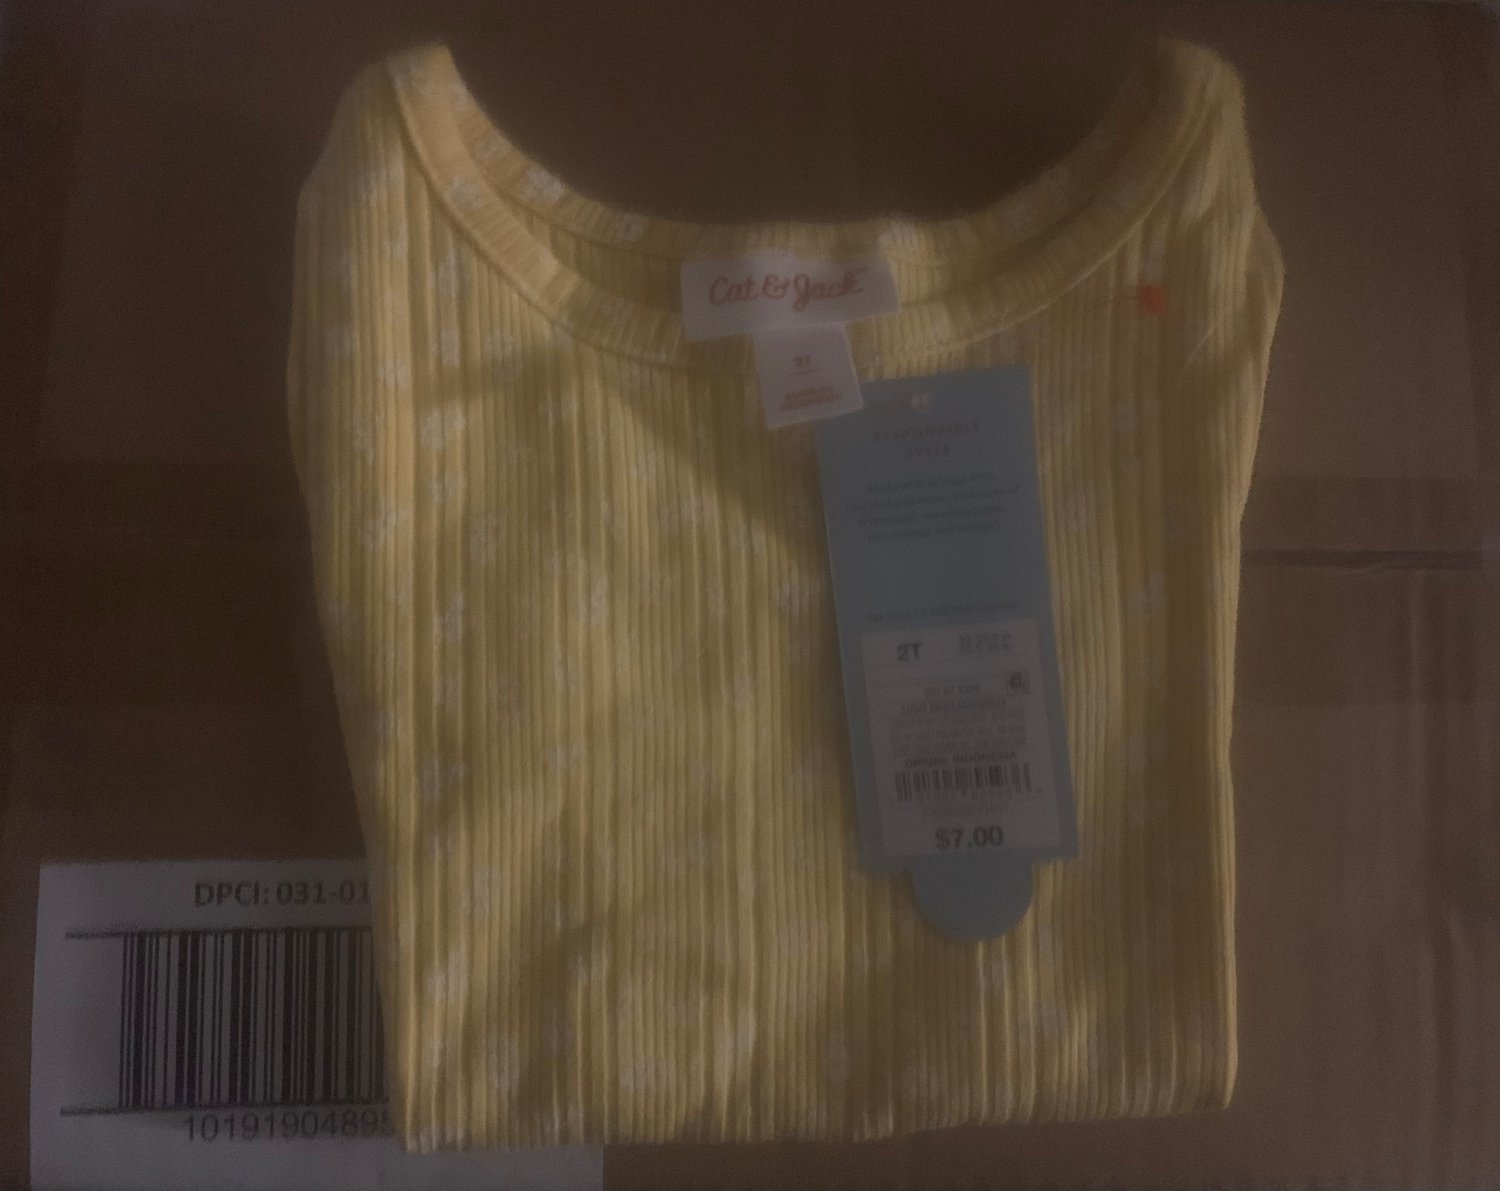 {1822) Wholesale Case of 12 Target Kids Mustard Yellow T-Shirt 2T